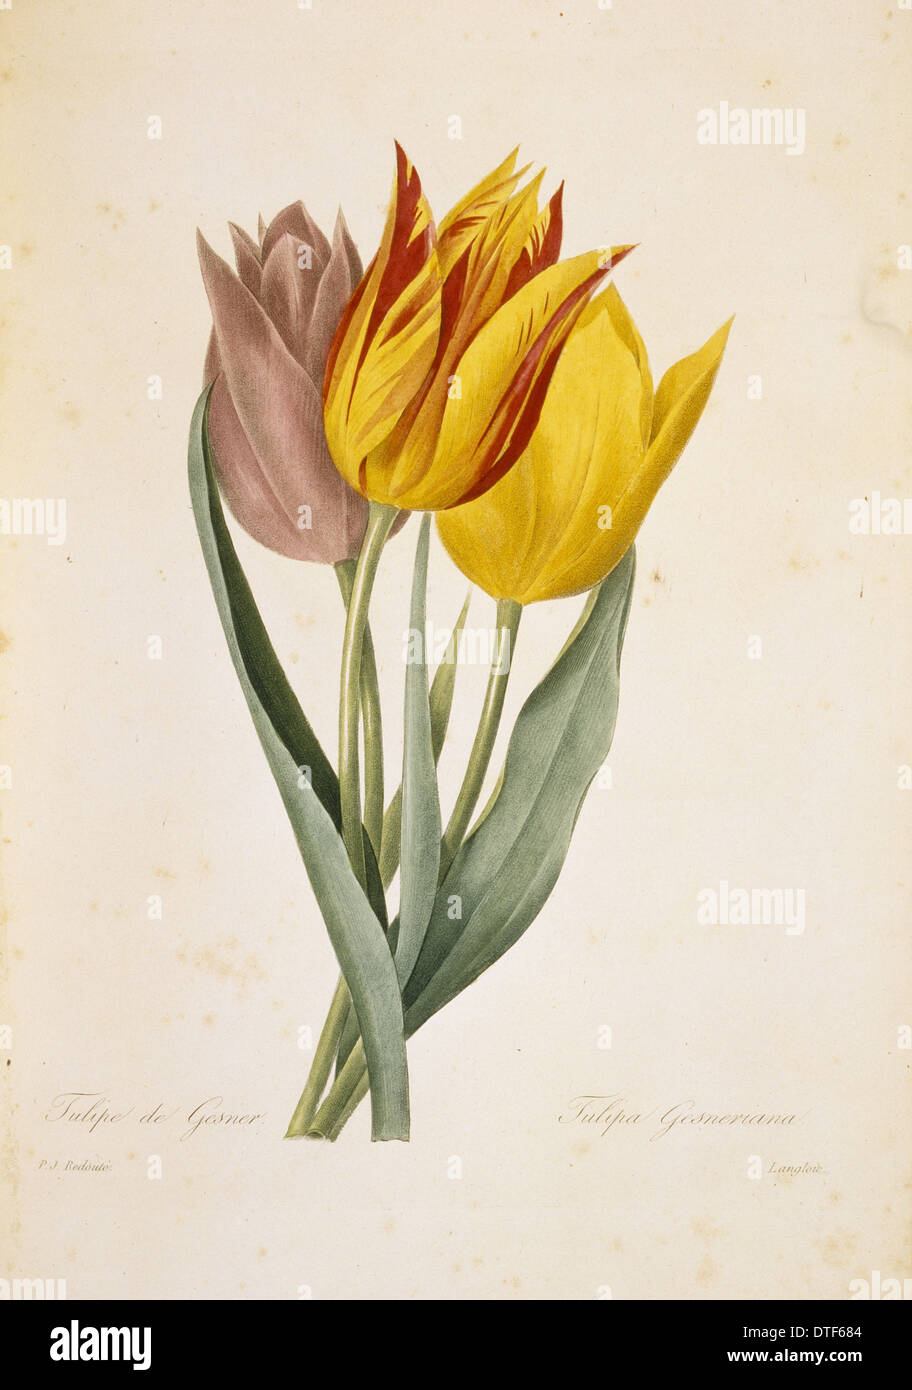 Tulipa gesneriana, tulip Stock Photo